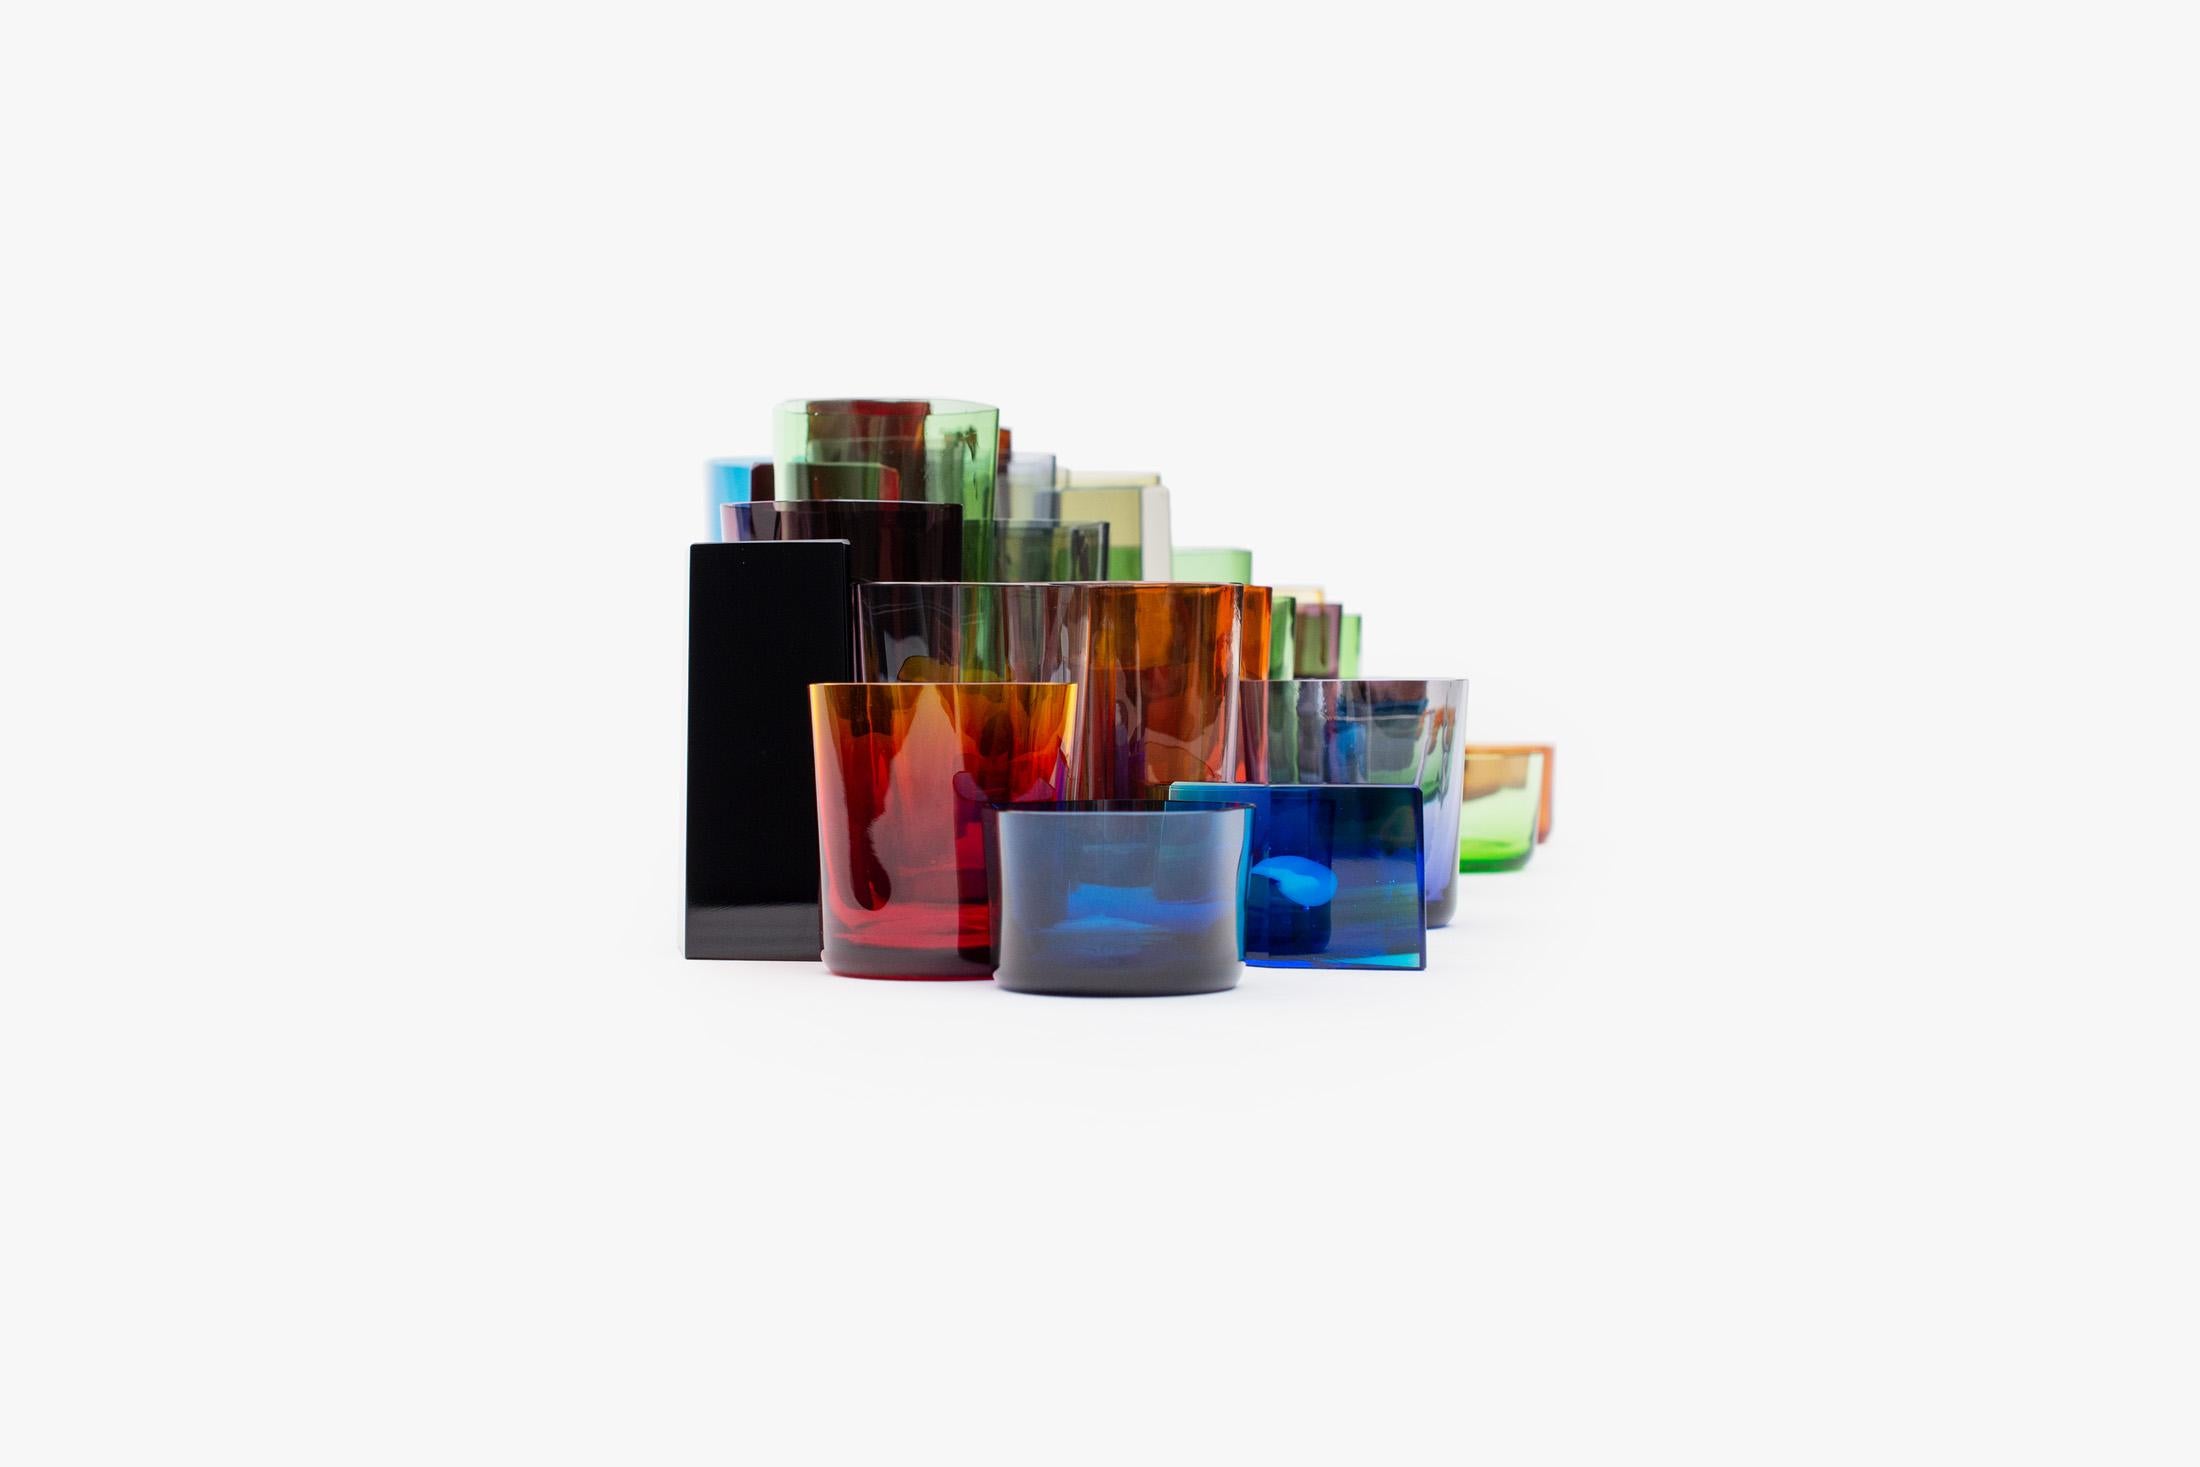 Czech Polygon Glassware by Omer Arbel For OAO Works, Geometric Blown Glass Sculpture For Sale